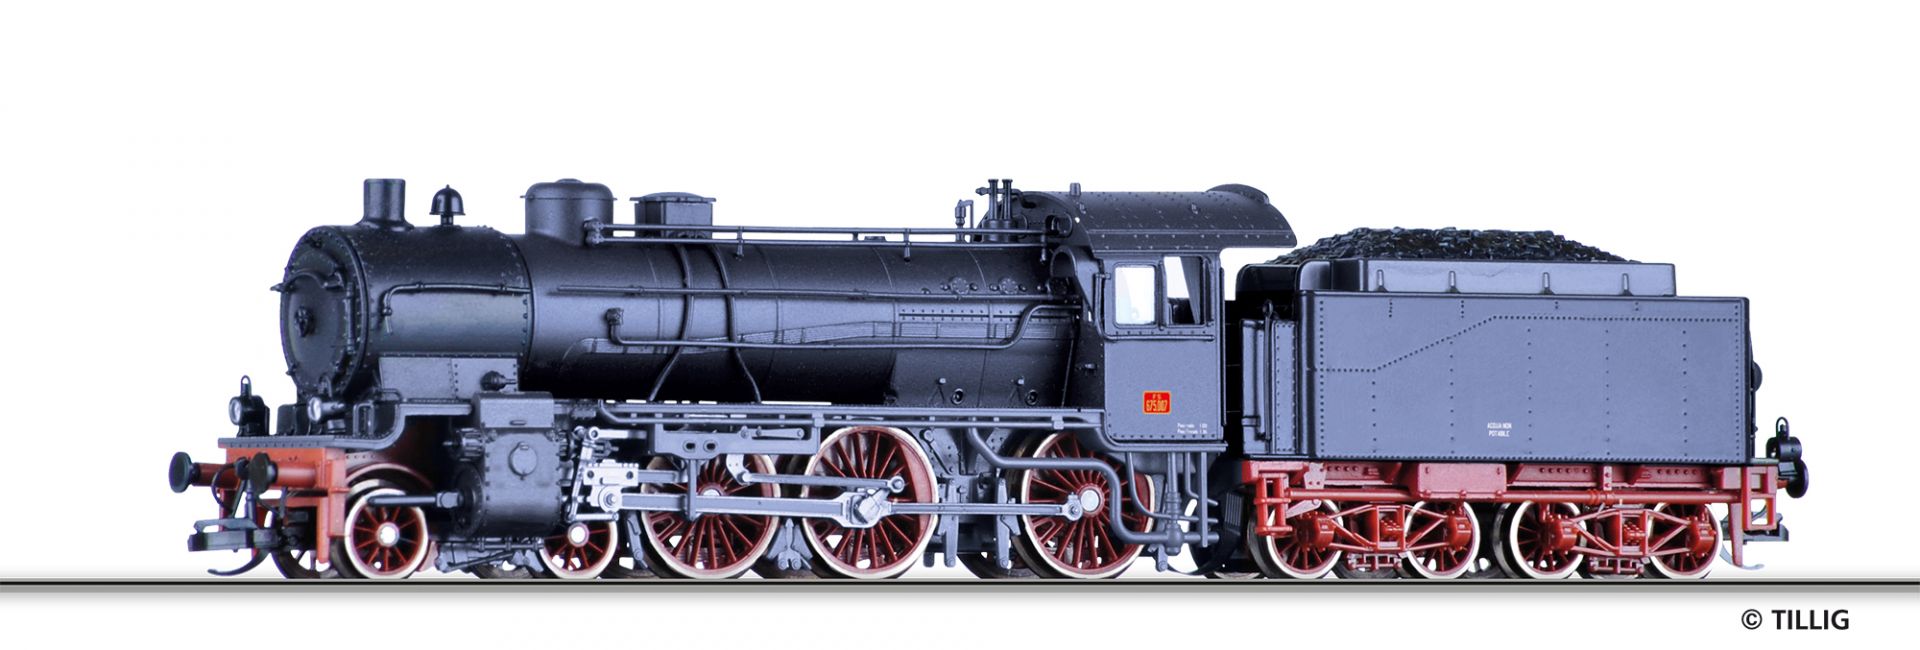 02033 | Dampflokomotive FS -entfällt-